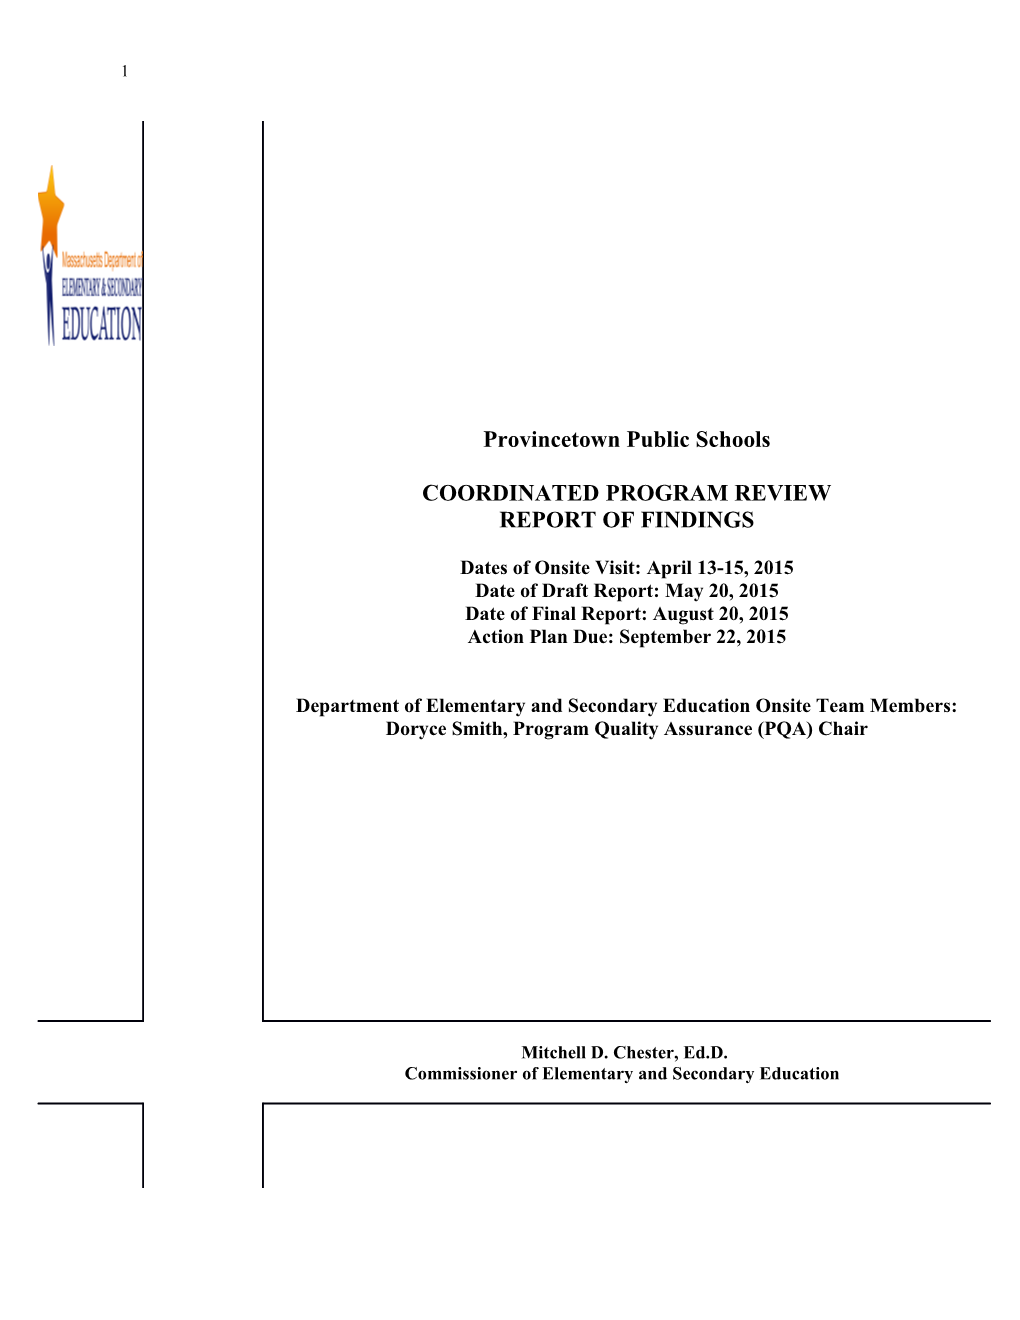 Provincetown Public Schools CPR Final Report 2015